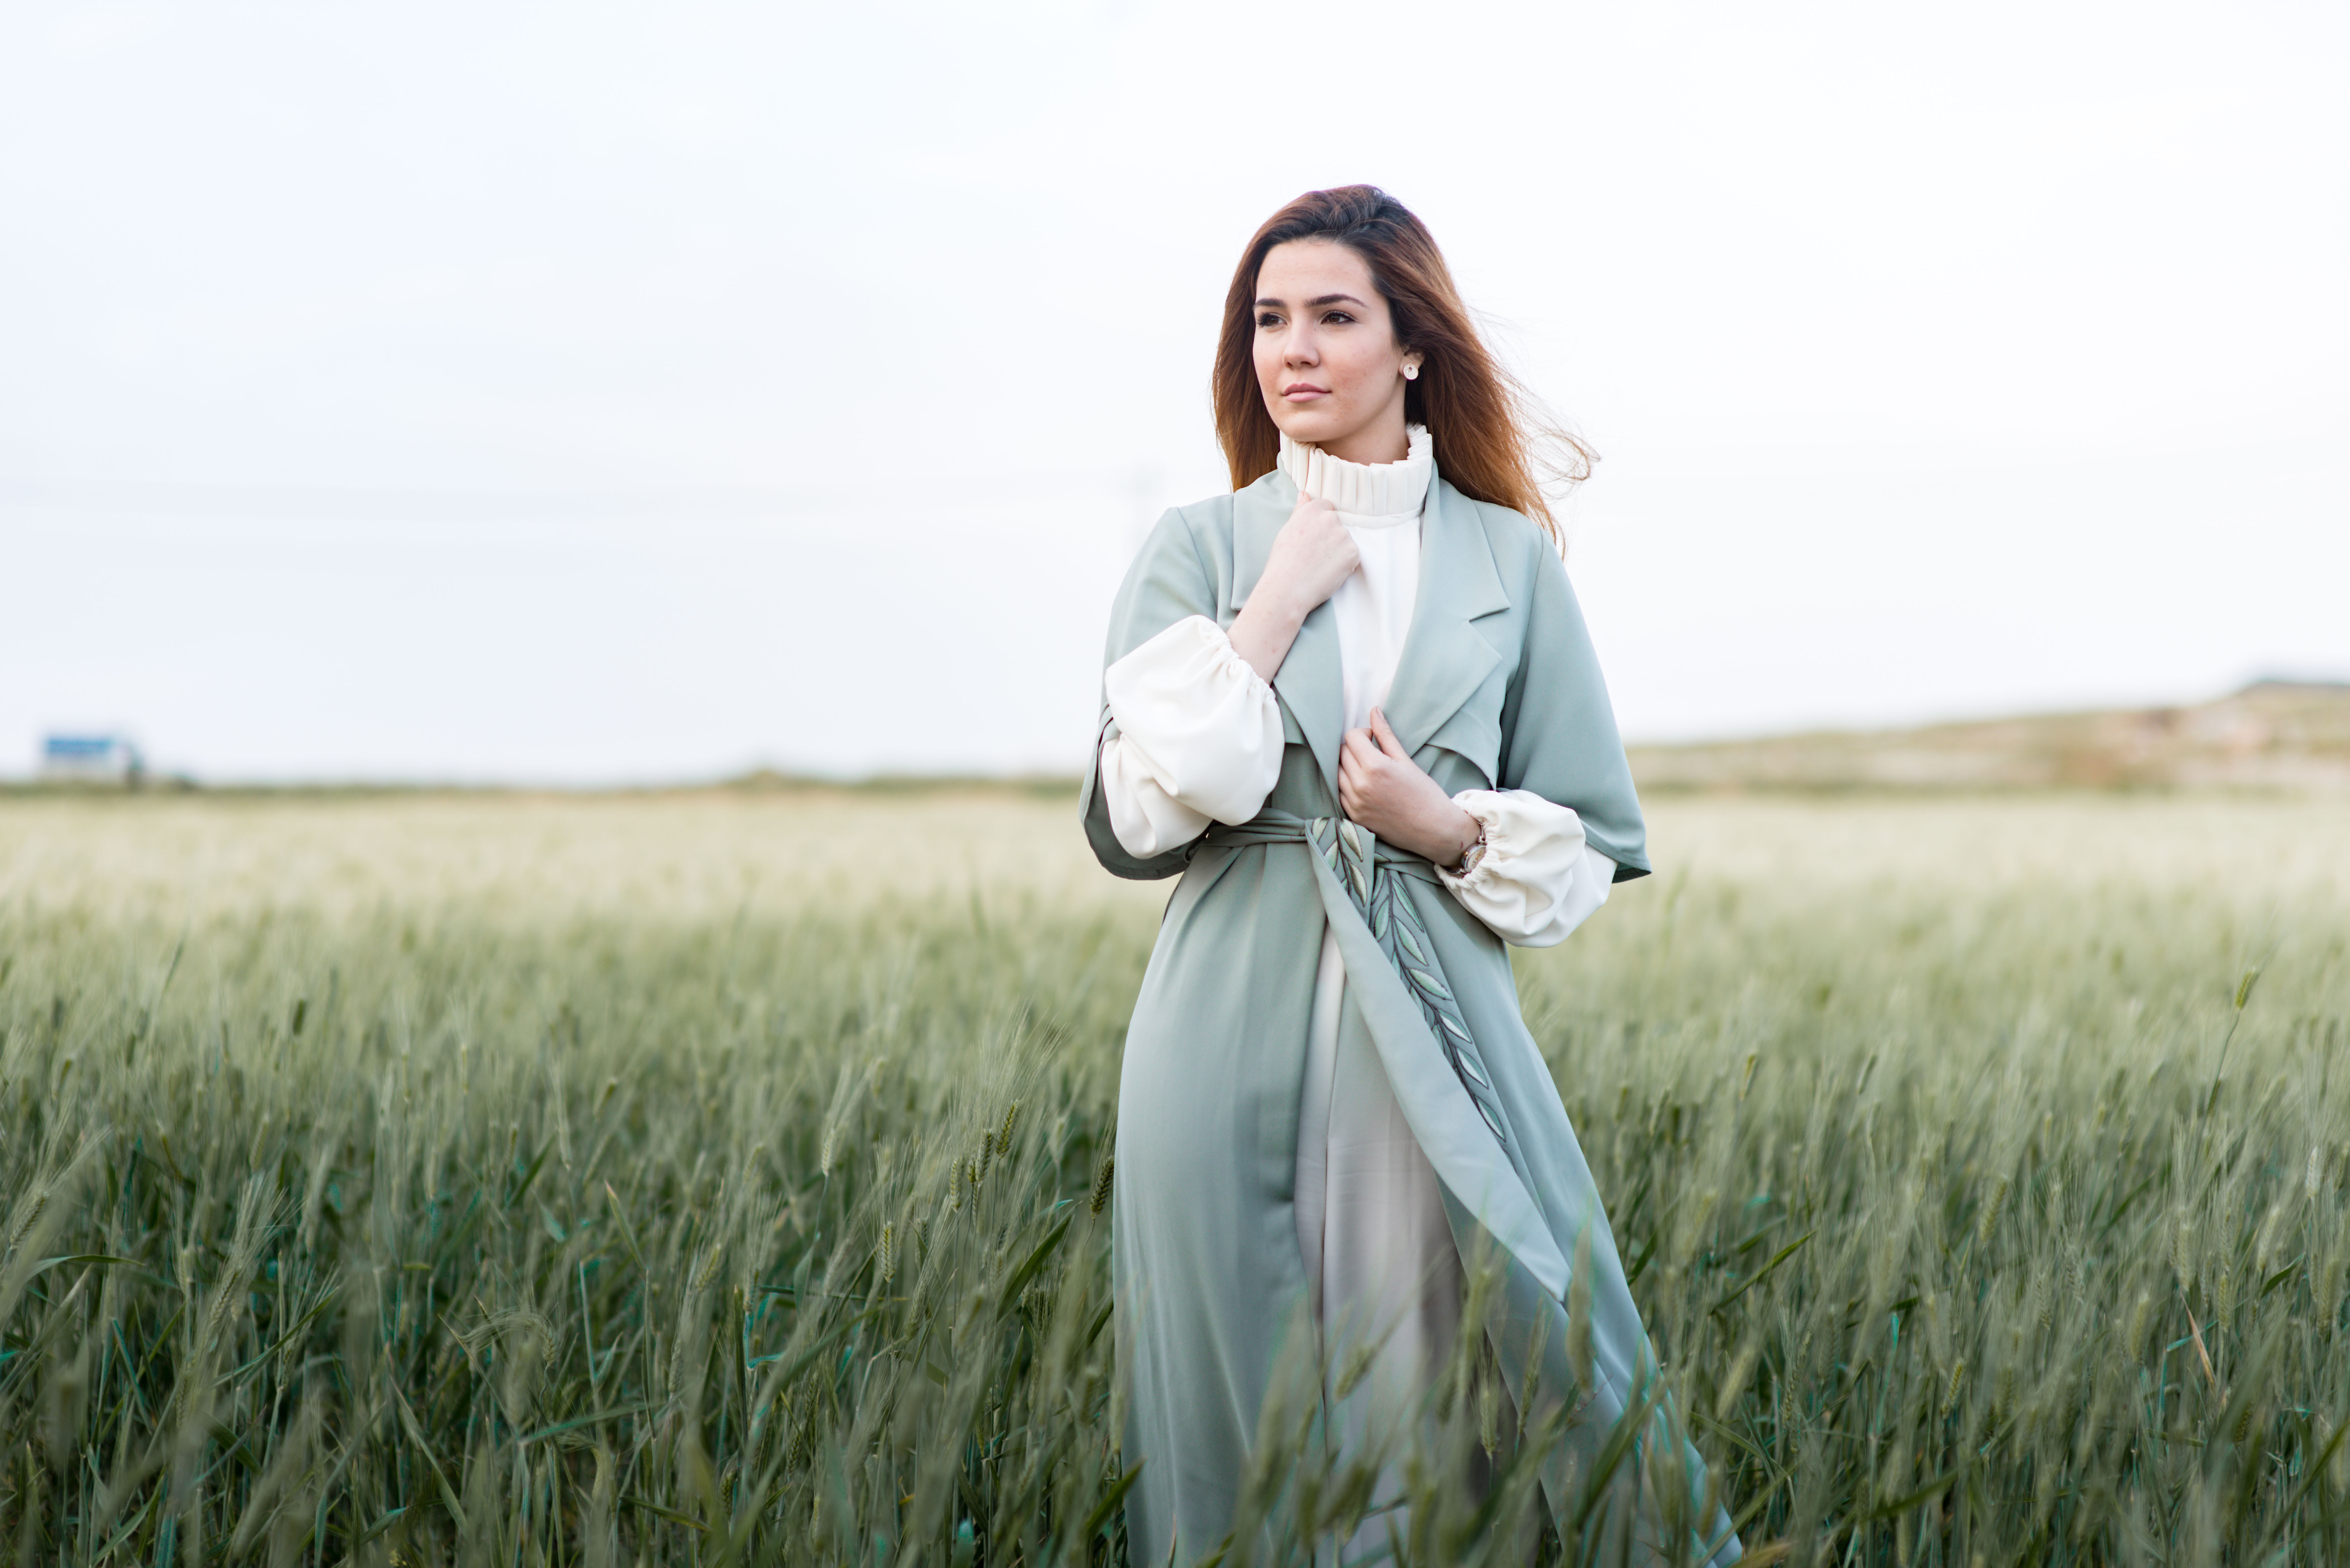 Female model, standing in a field of grass